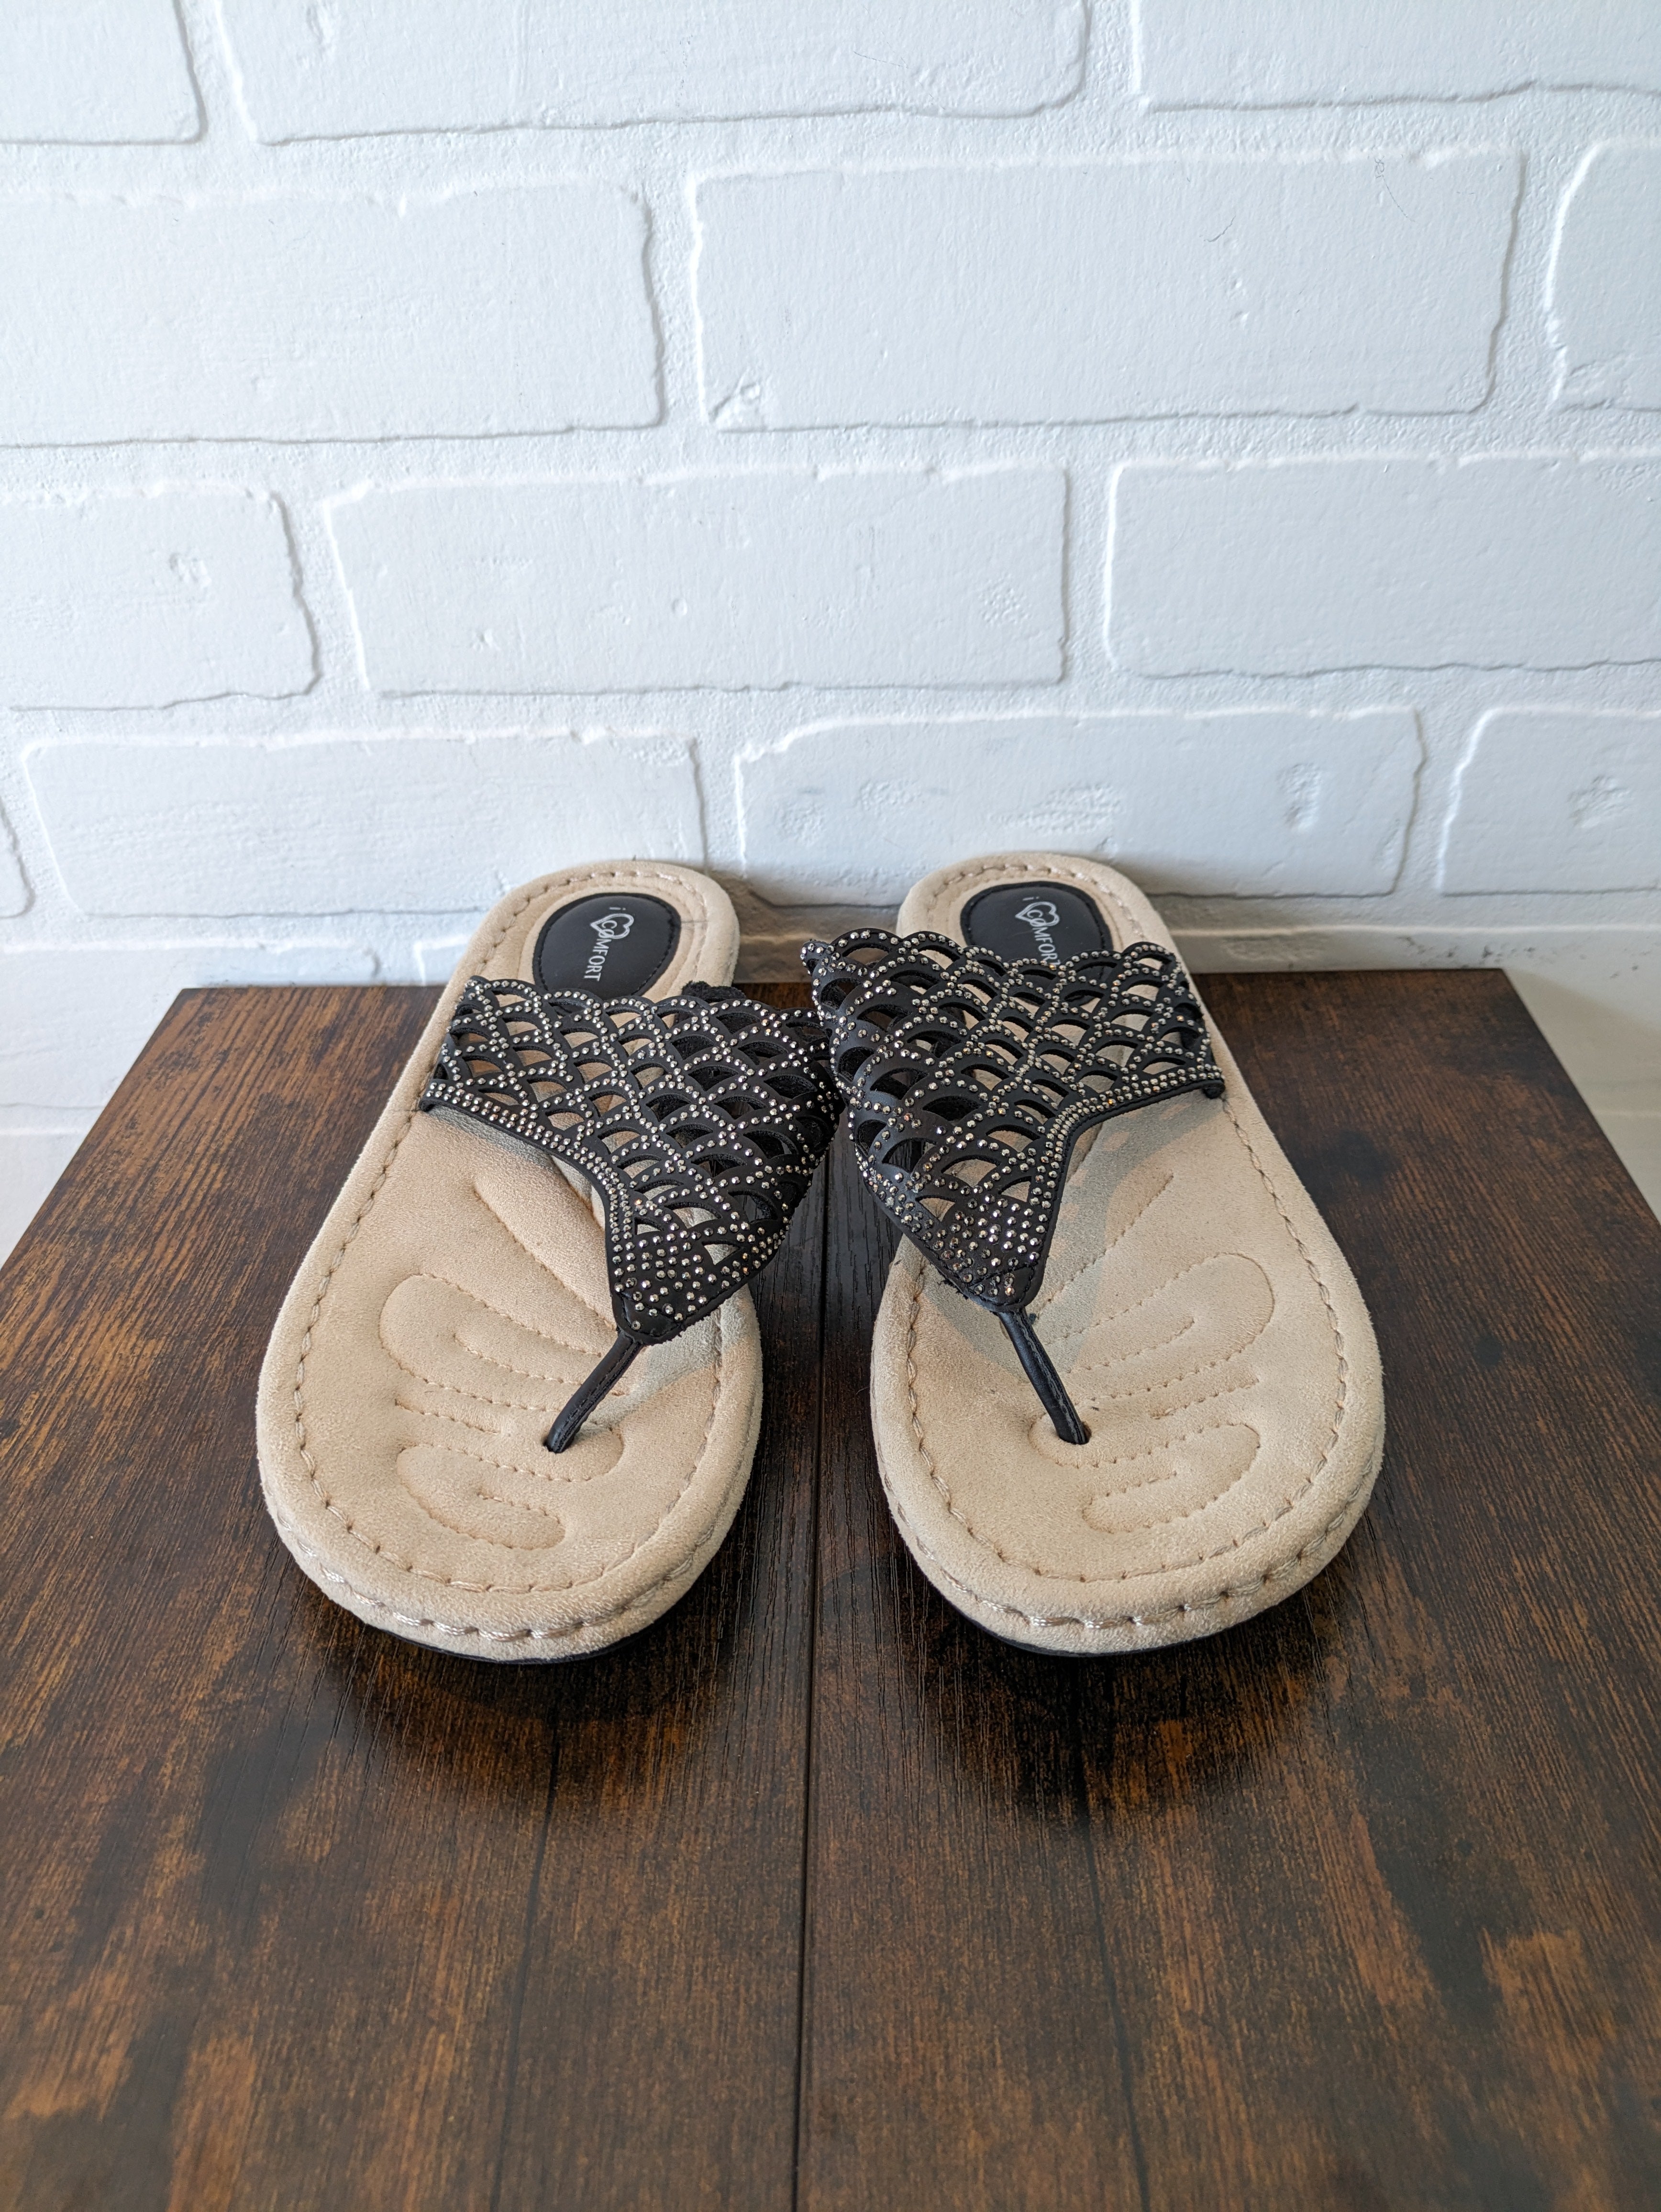 sandals I Love Comfort | eBay